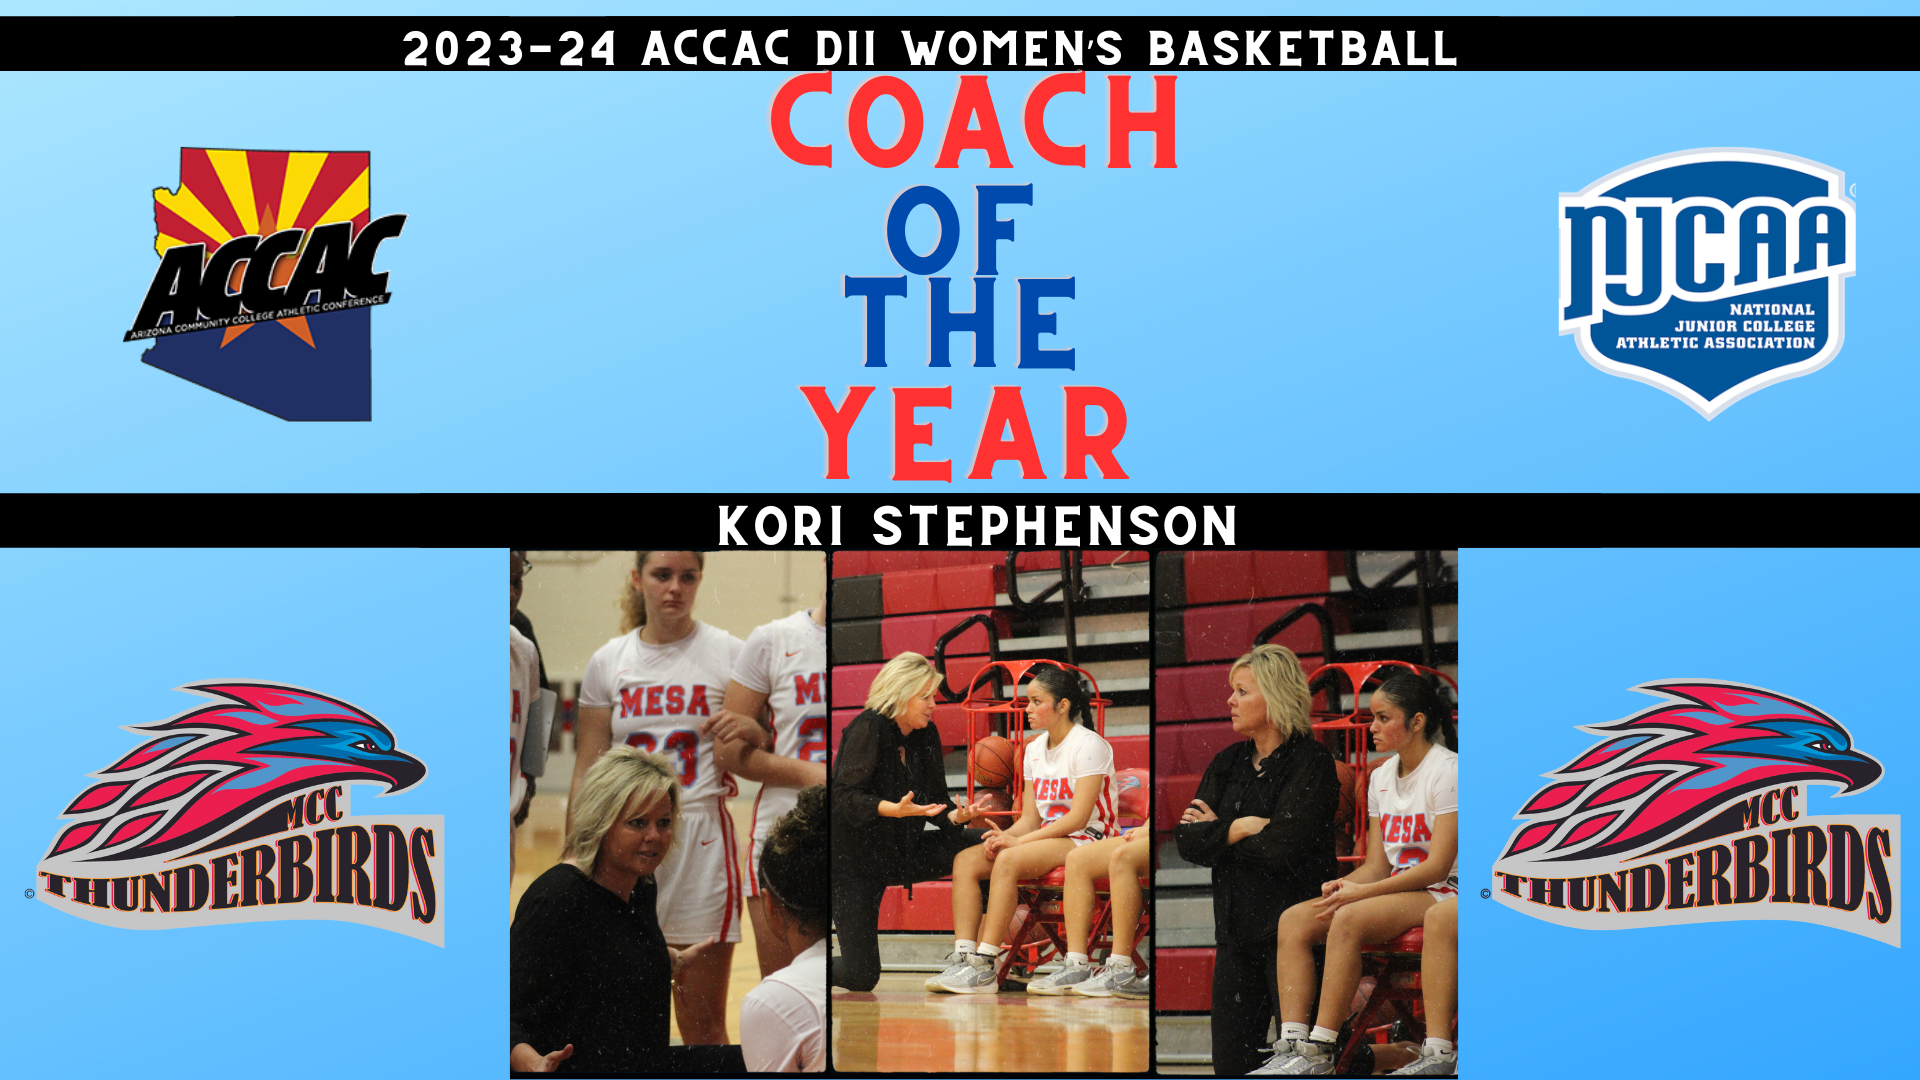 Kori Stephenson named ACCAC DII Women's Basketball Coach of the Year